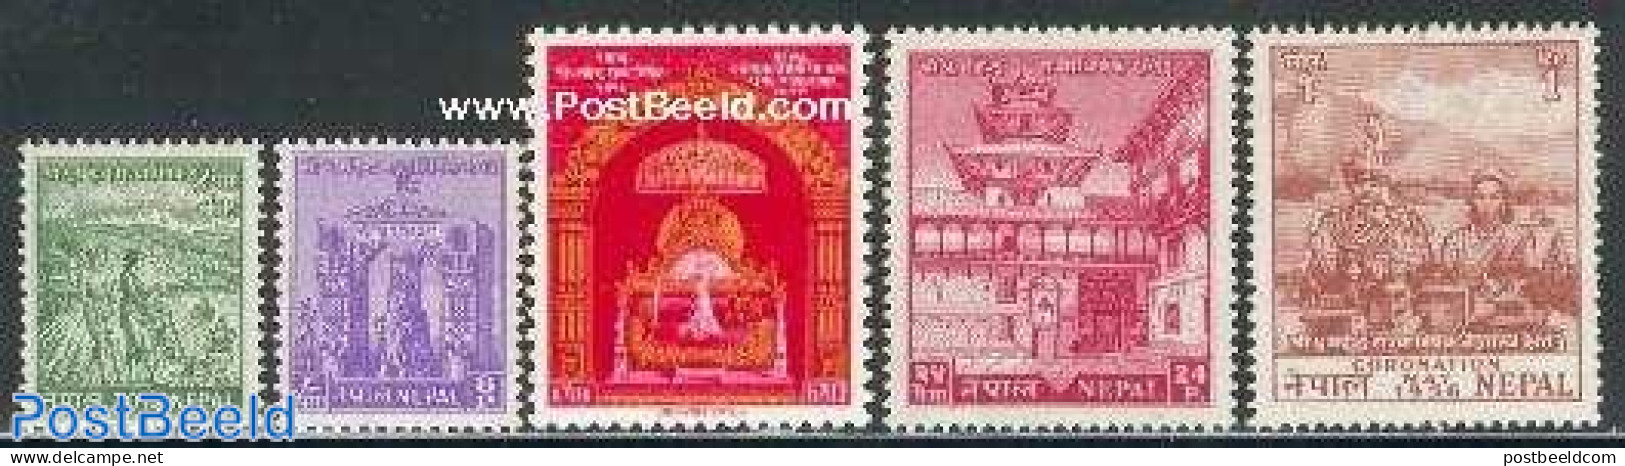 Nepal 1956 Coronation 5v, Unused (hinged), History - Kings & Queens (Royalty) - Royalties, Royals